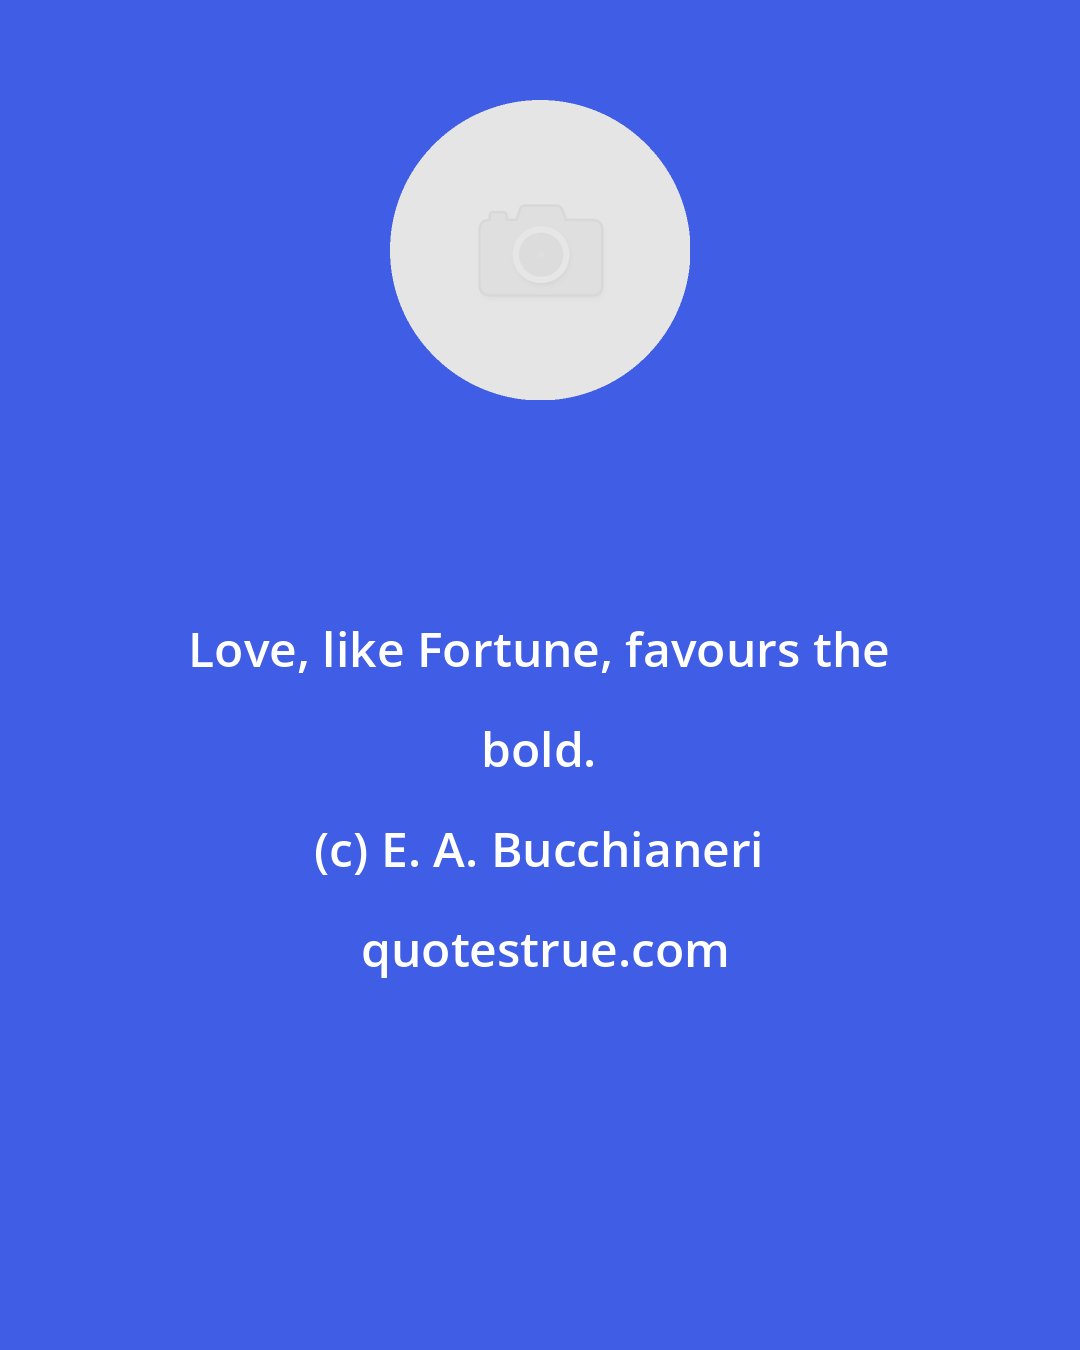 E. A. Bucchianeri: Love, like Fortune, favours the bold.